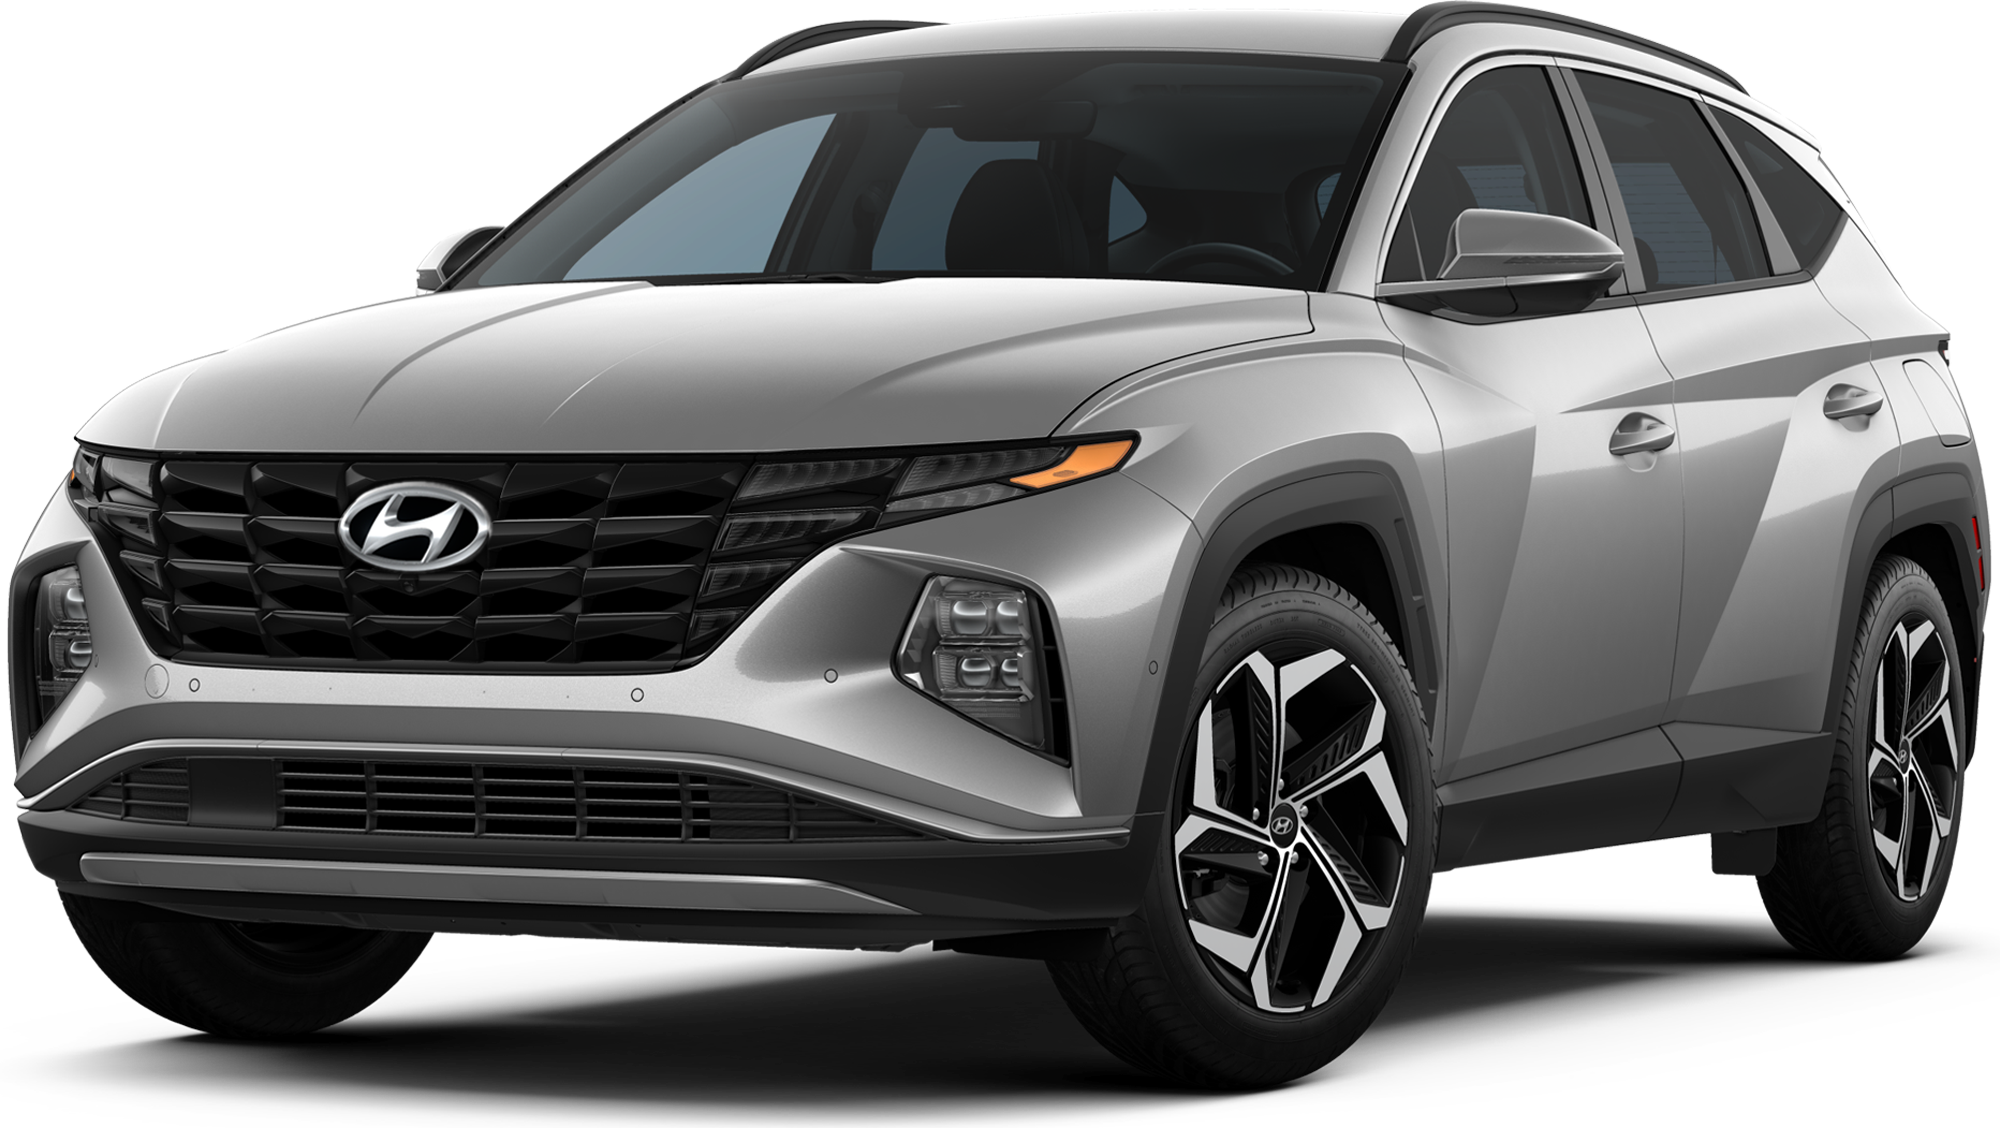 https://images.dealer.com/ddc/vehicles/2023/Hyundai/Tucson%20Plug-In%20Hybrid/SUV/perspective/front-left/2023_56.png